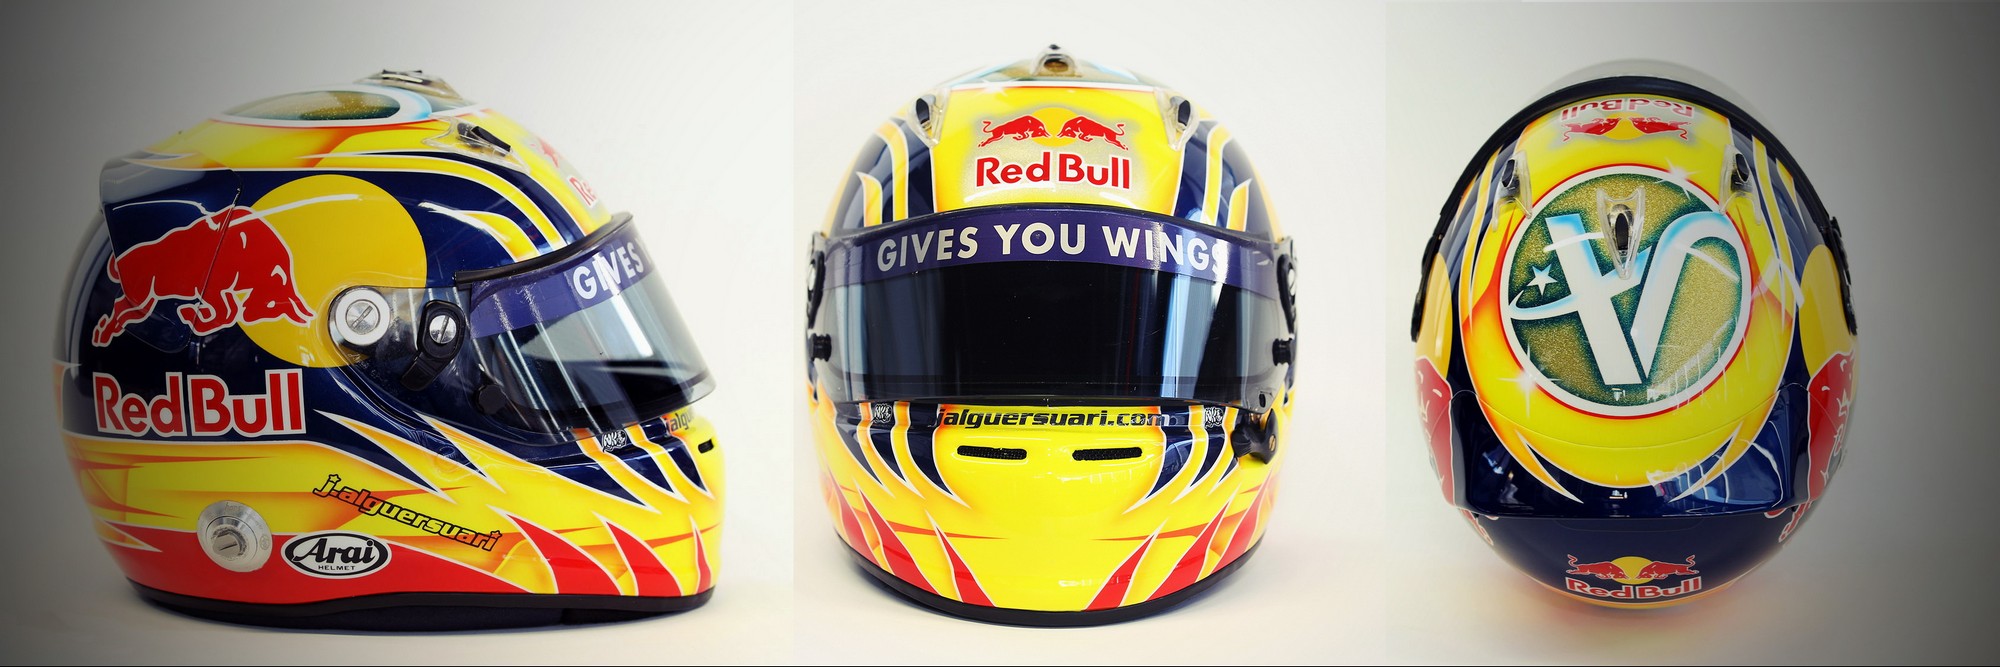 Шлем Хайме Альгерсуари на сезон 2011 года | 2011 helmet of Jaime Alguersuari